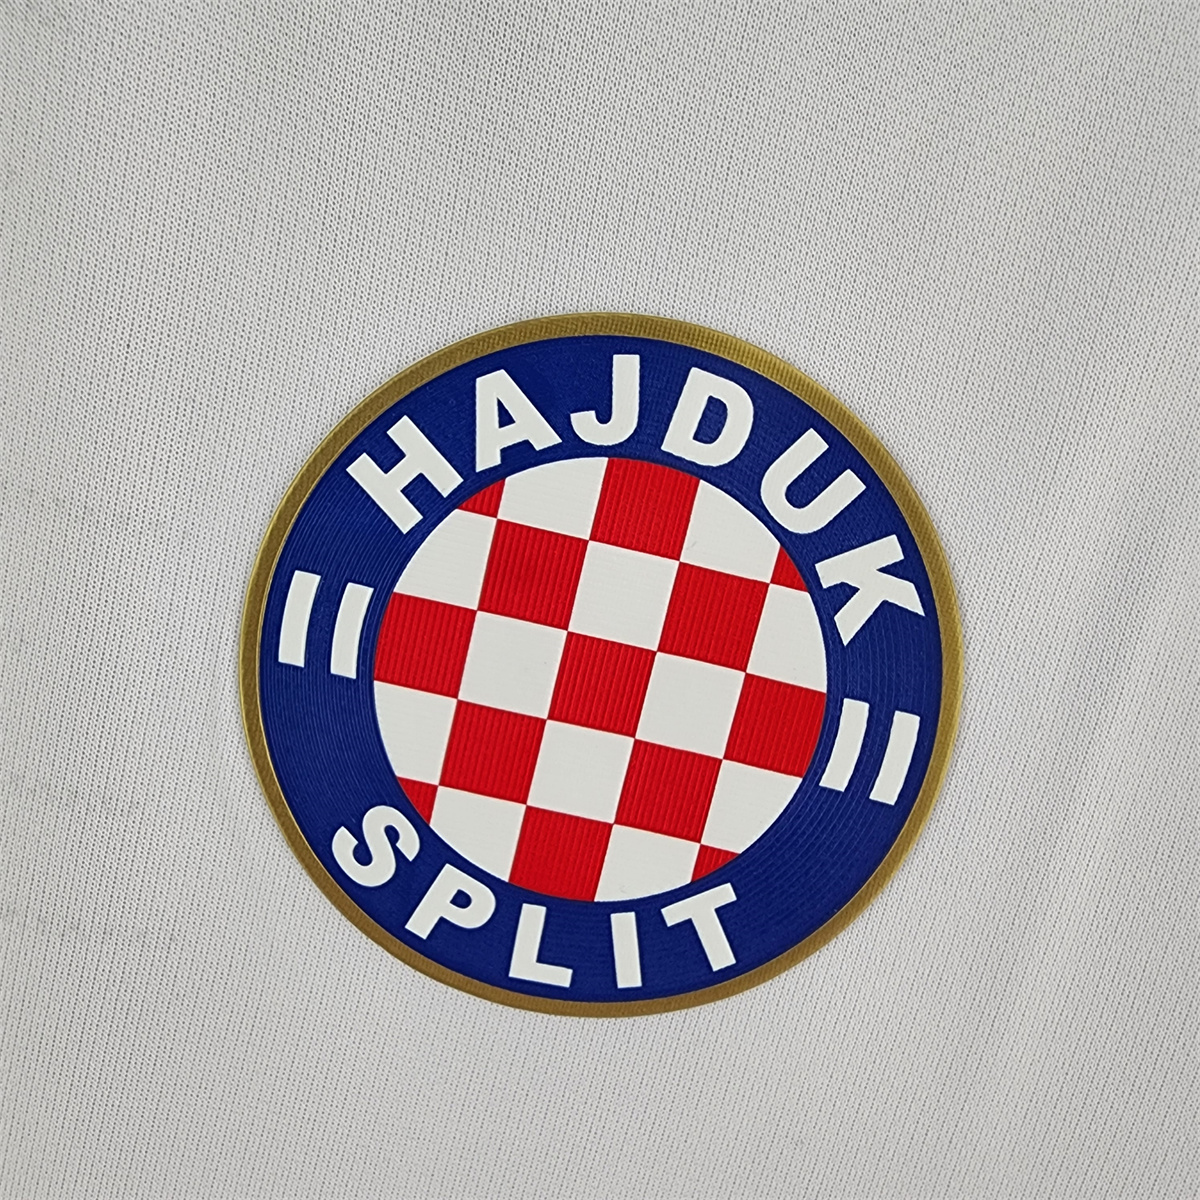 T-shirt Hajduk Split 2020/21 - Outros clubes - Outros clubes - Adeptos